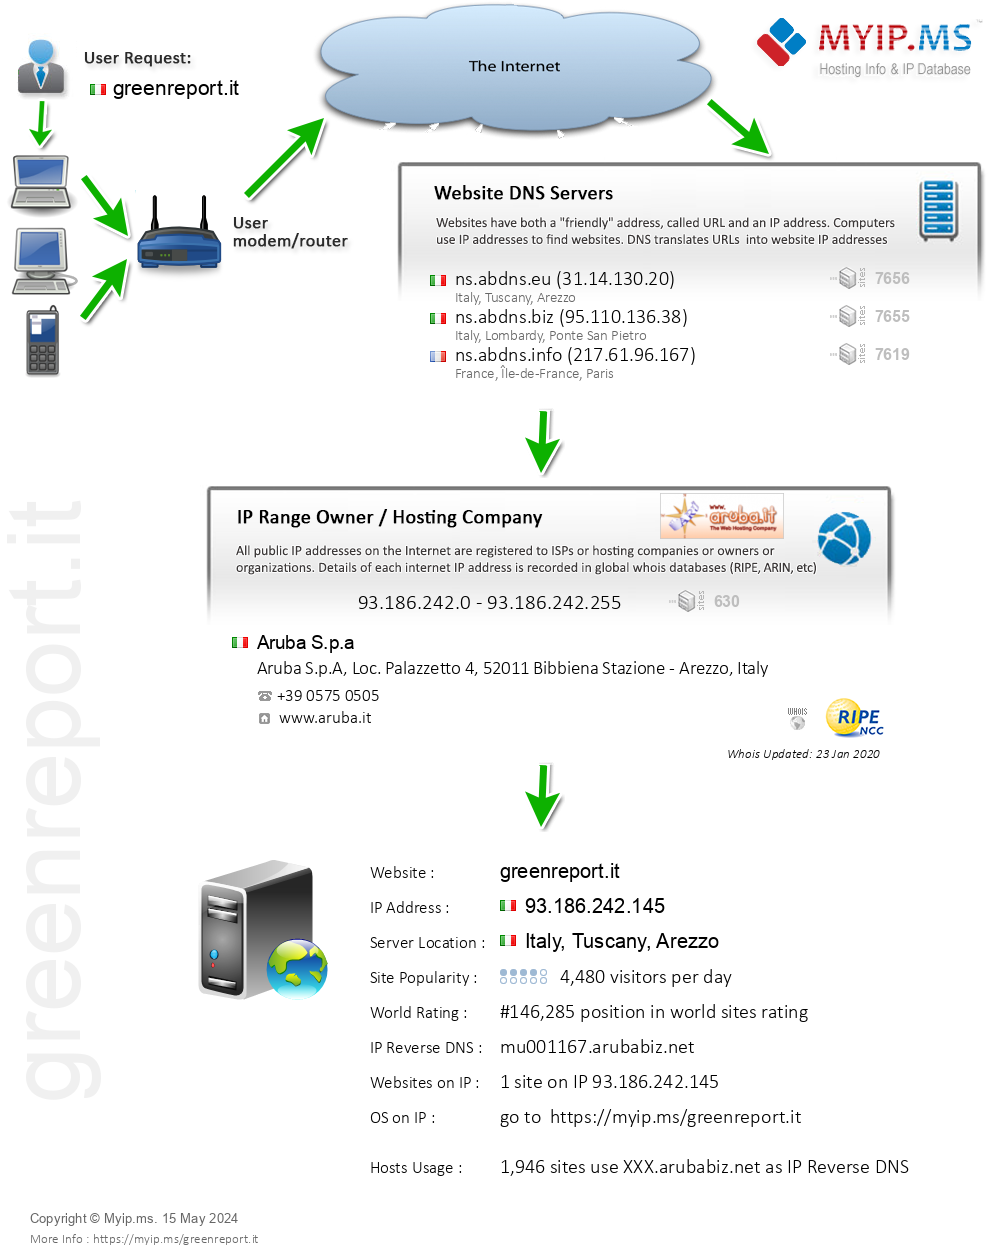 Greenreport.it - Website Hosting Visual IP Diagram